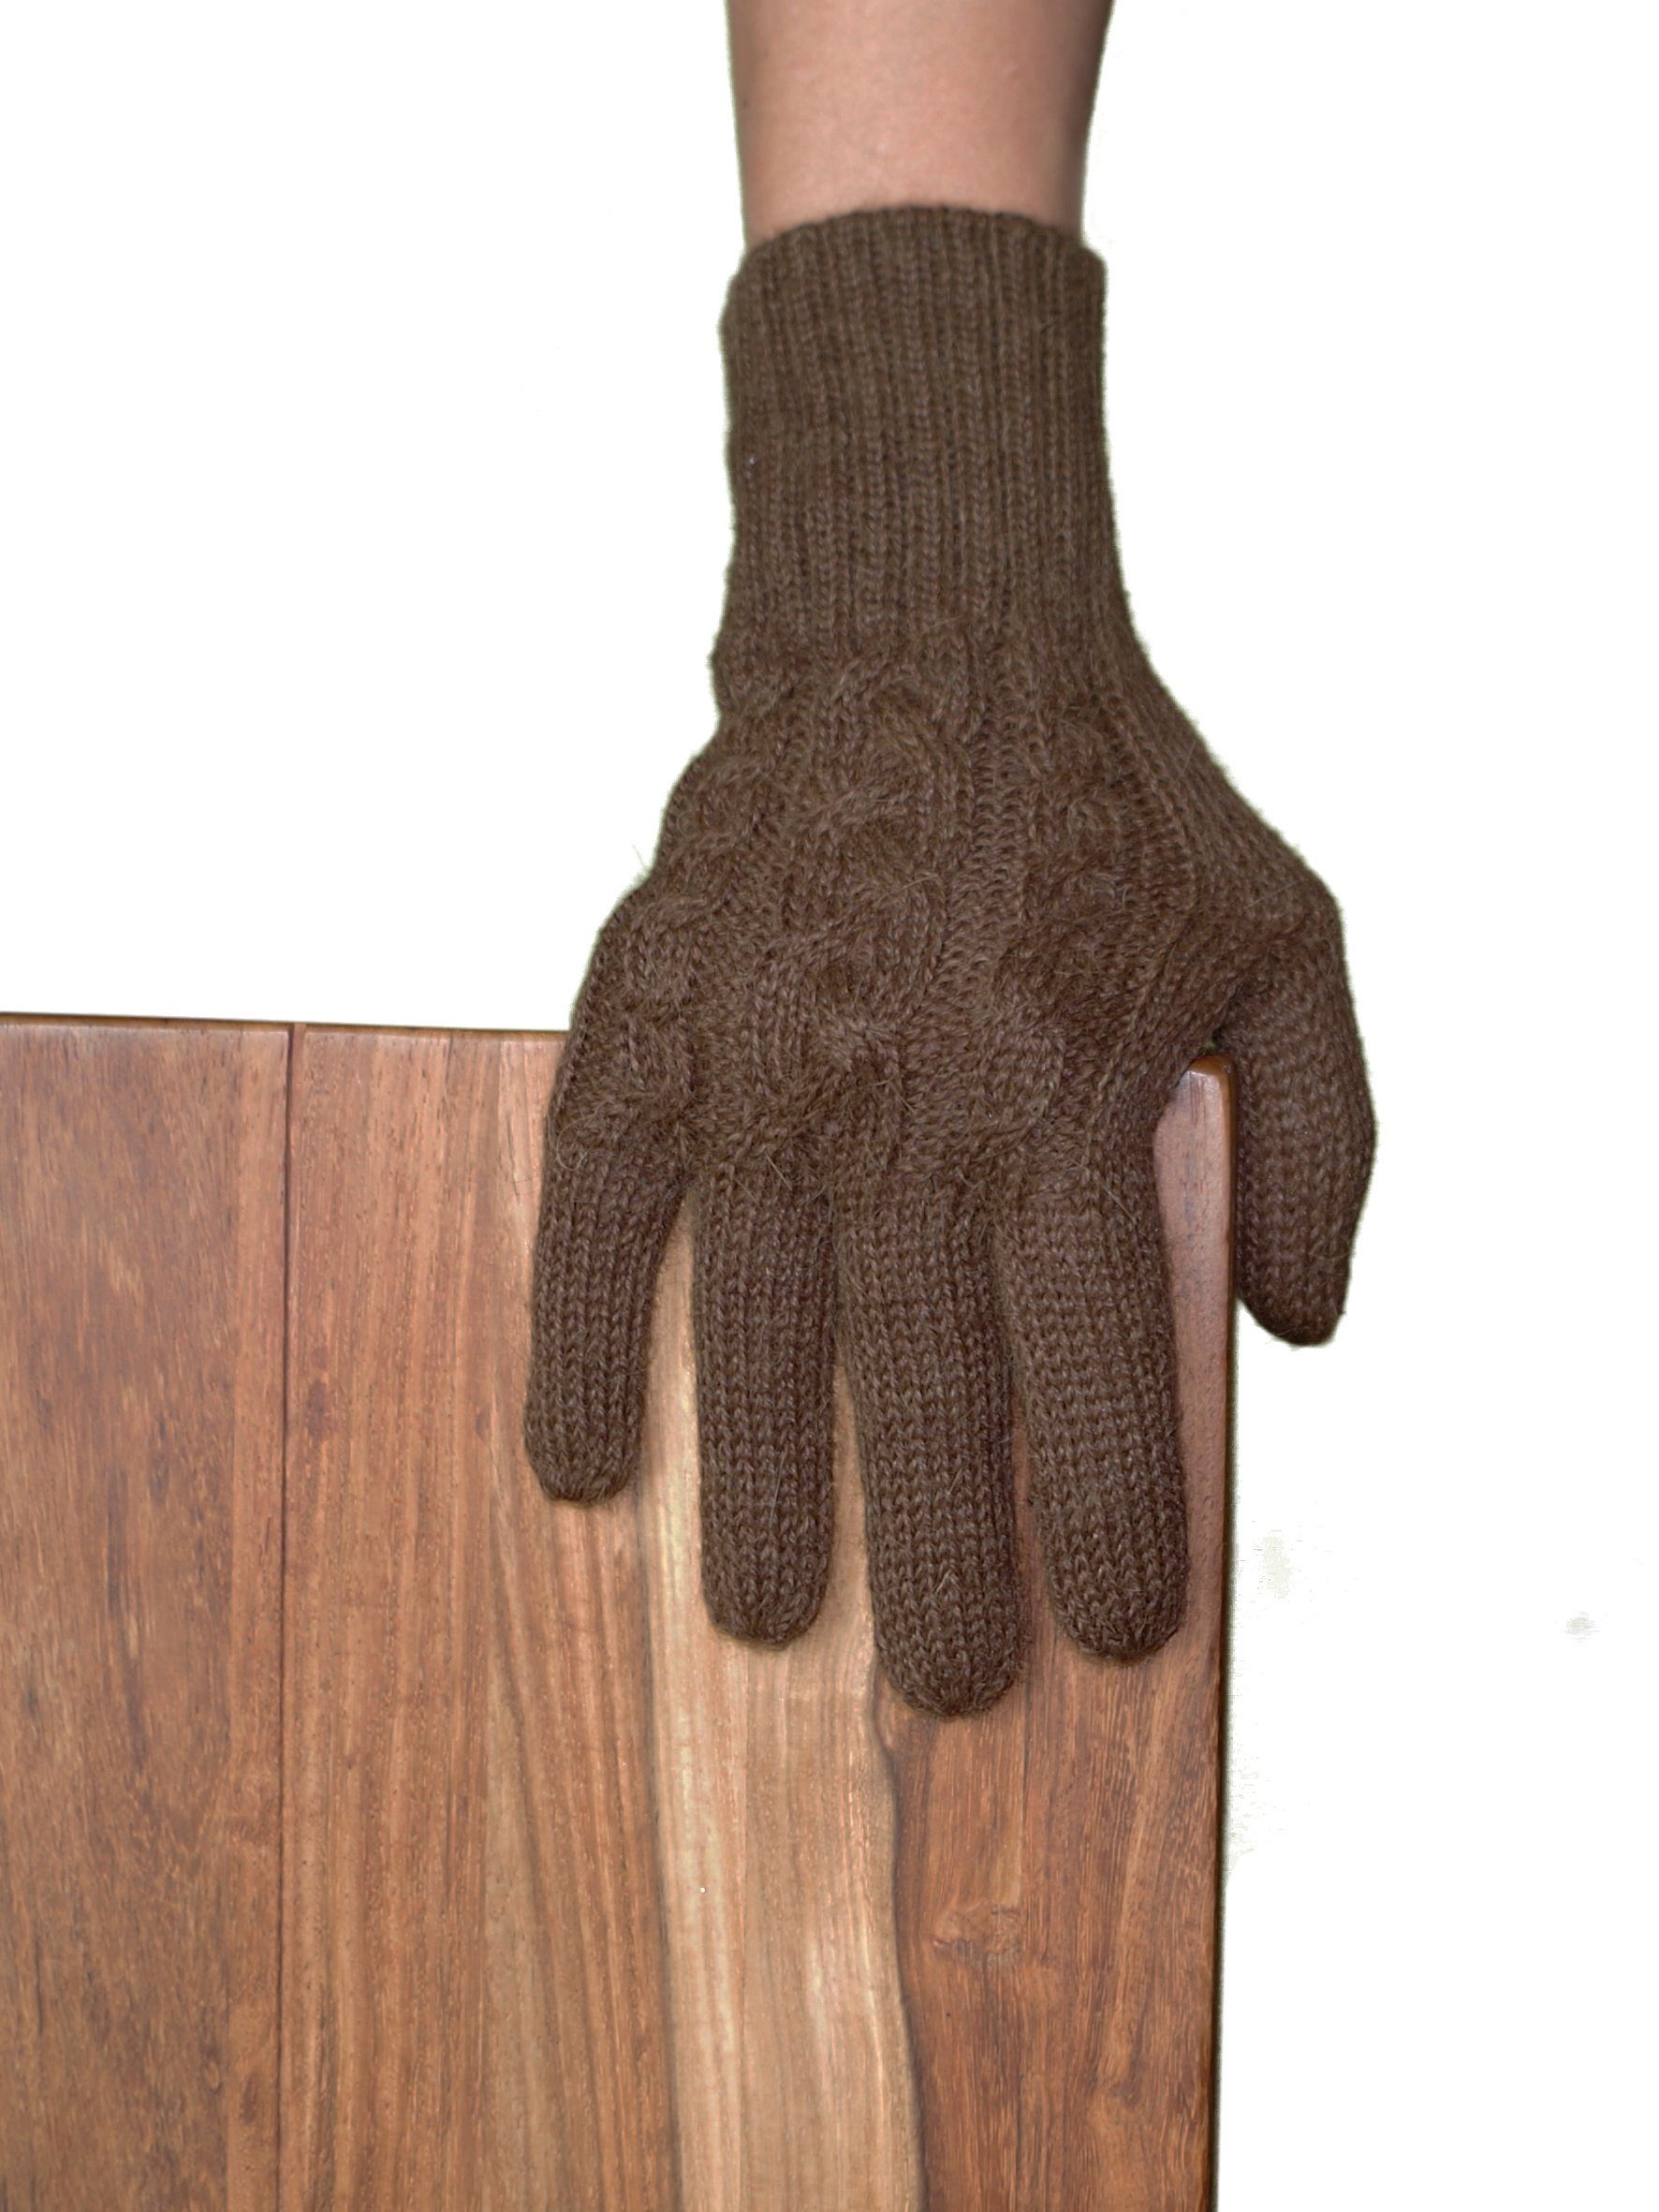 Posh Gear Strickhandschuhe Alpakawolle aus Alpaka Fingerhandschuhe braun Guantibrada 100